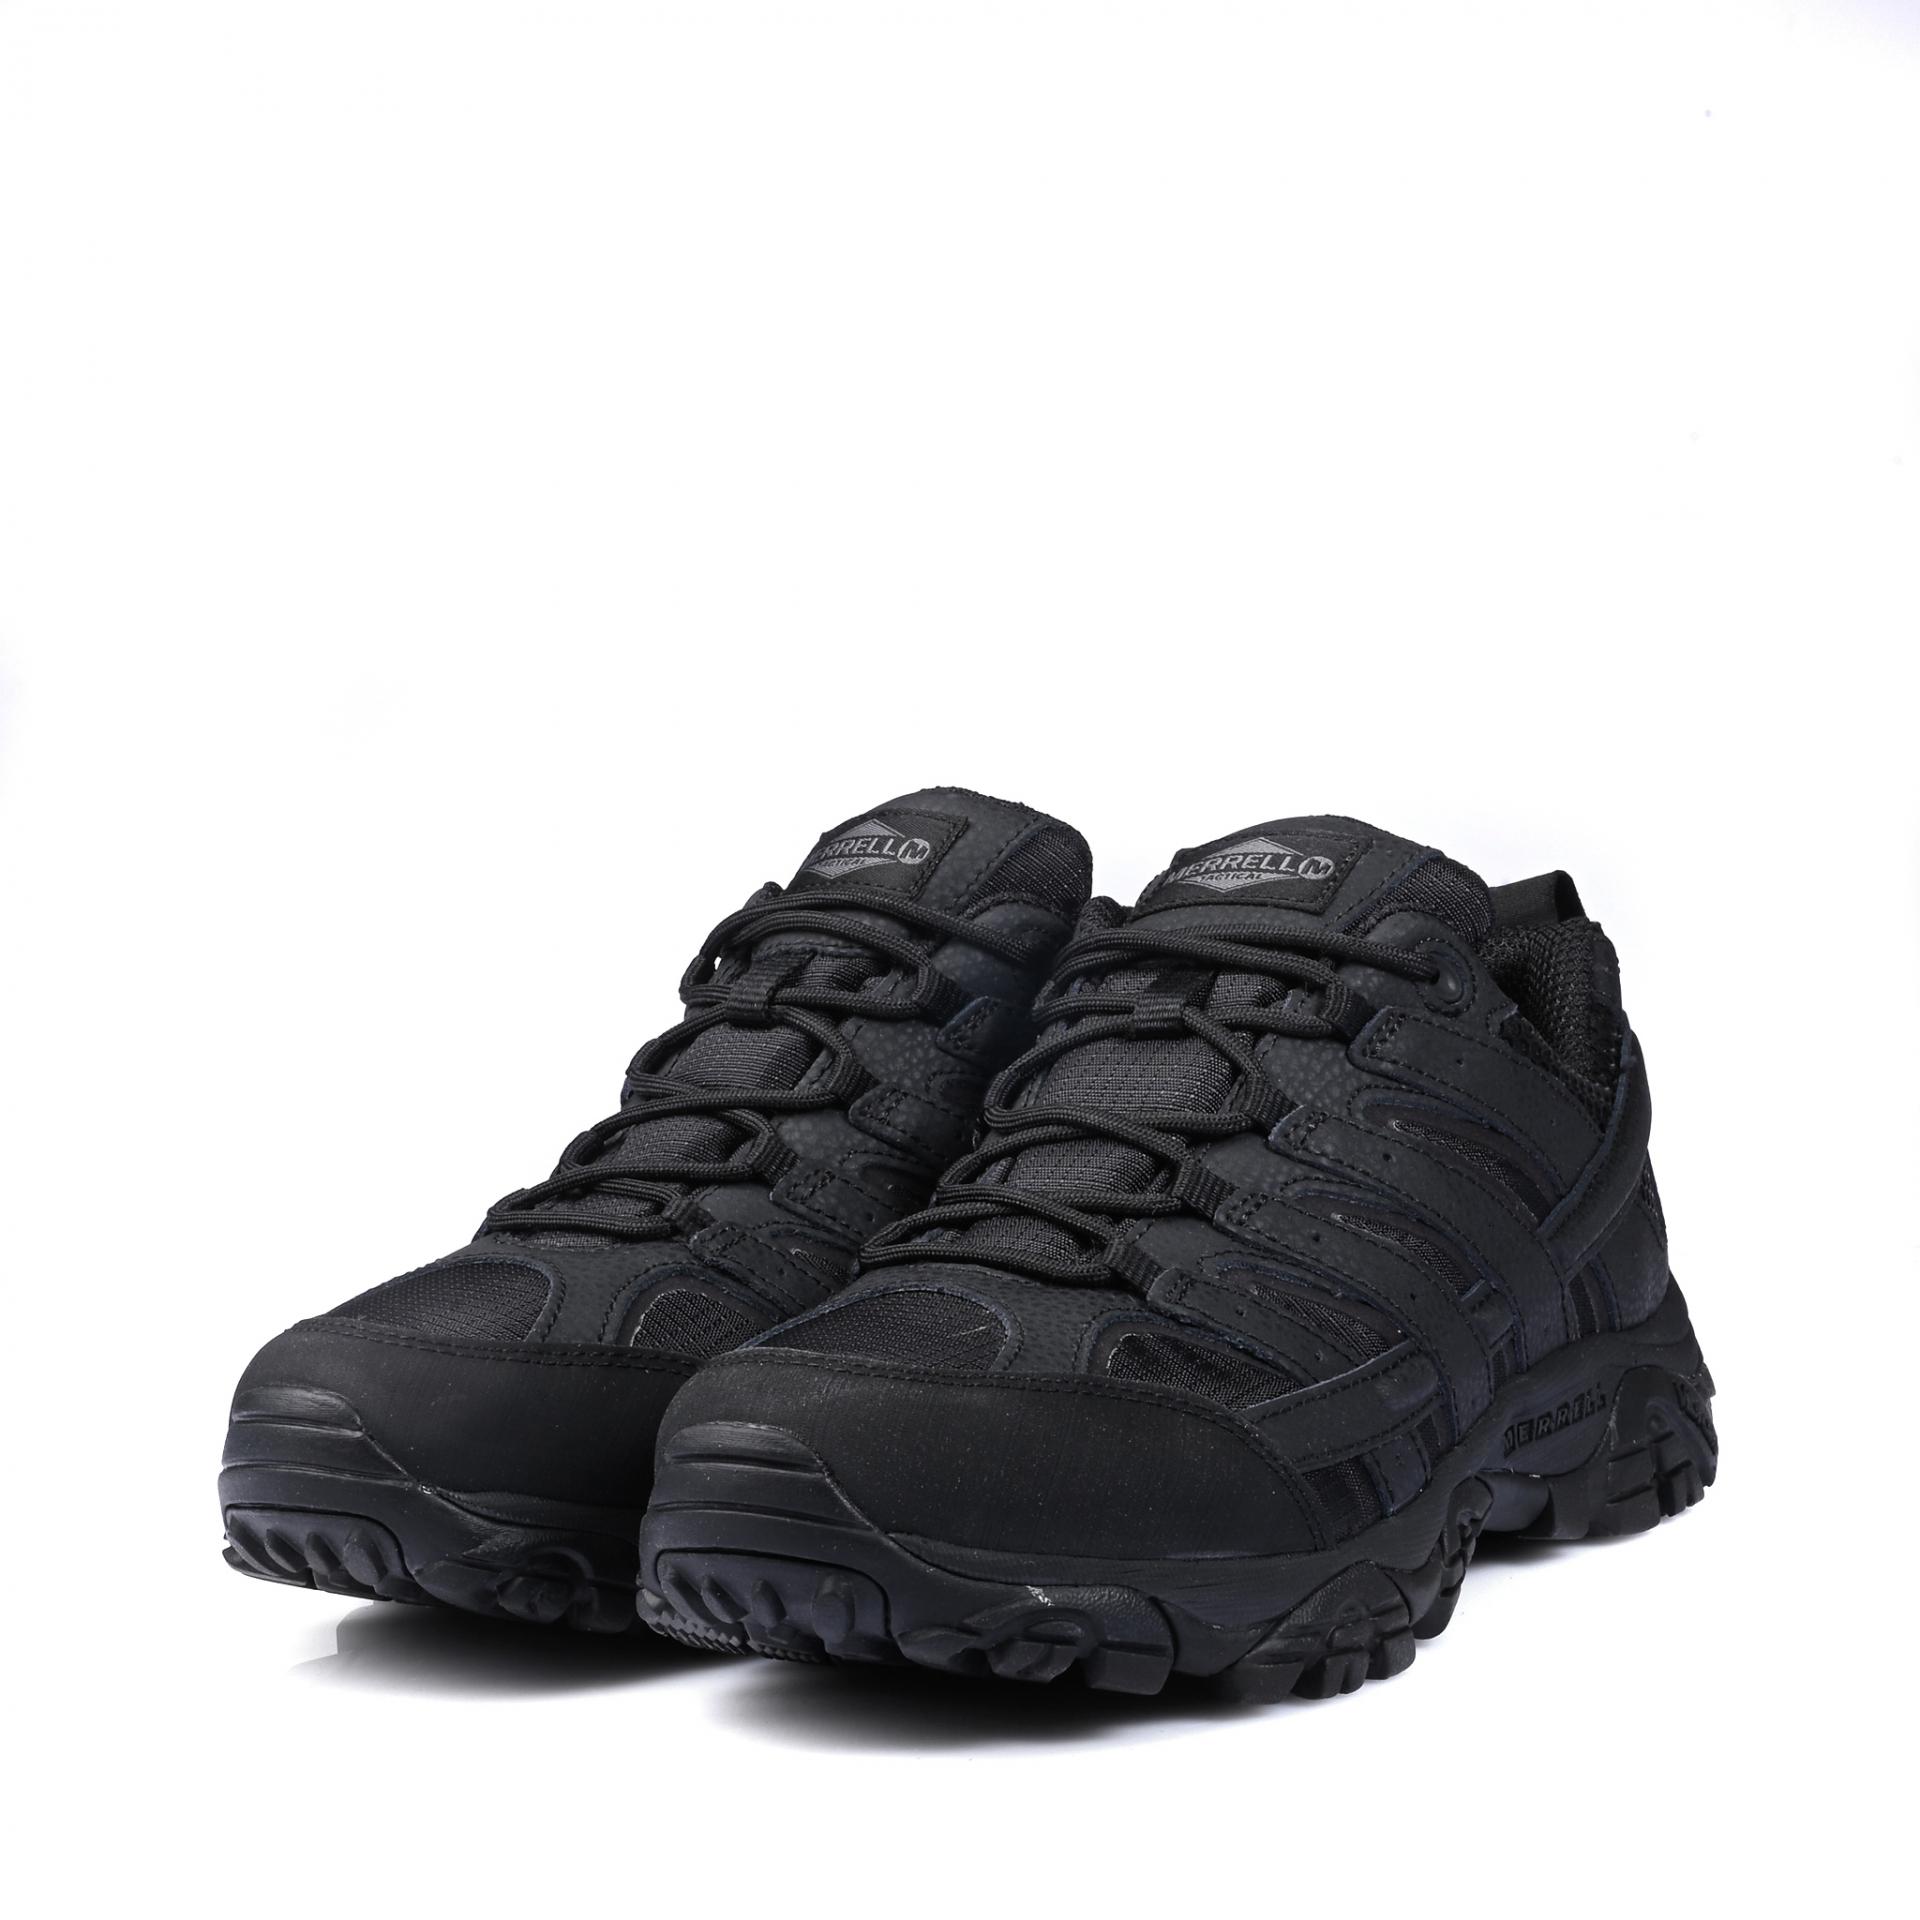 Merrell Men s Moab 2 Tactical Shoe Black J15861